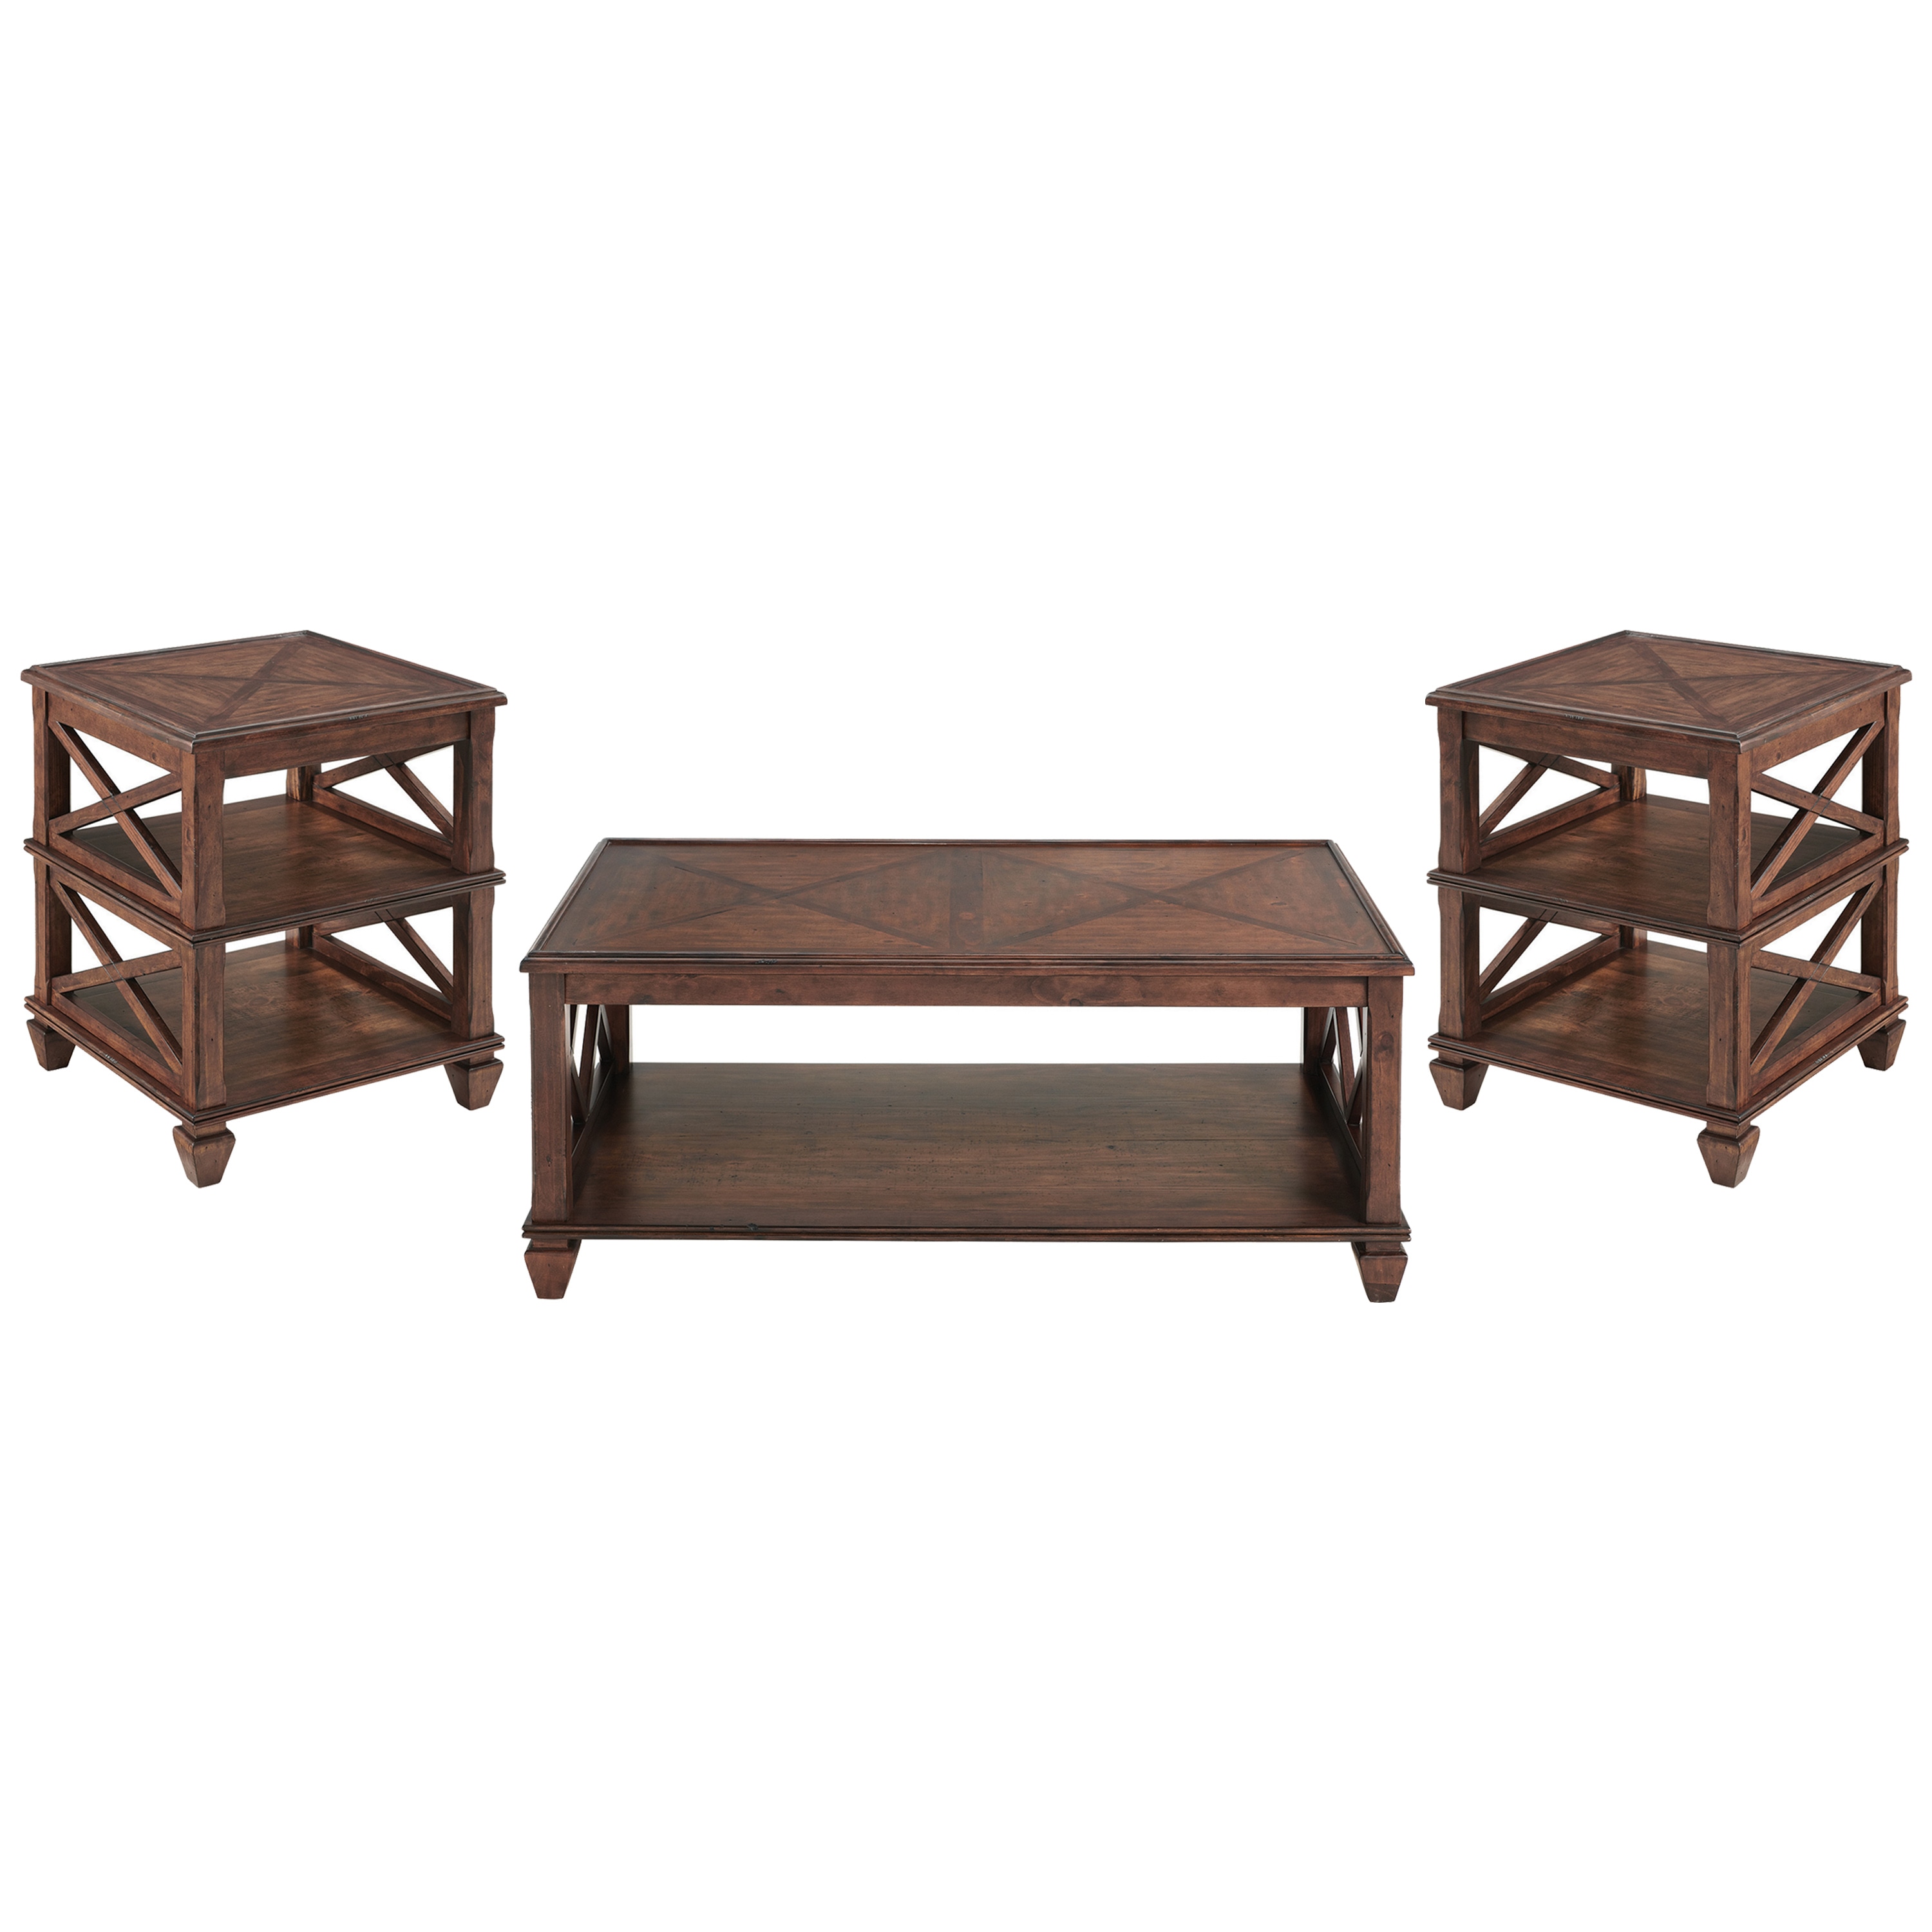 Alaterre Furniture Stockbridge 3 Piece, End Tables For Living Room Set Of 2